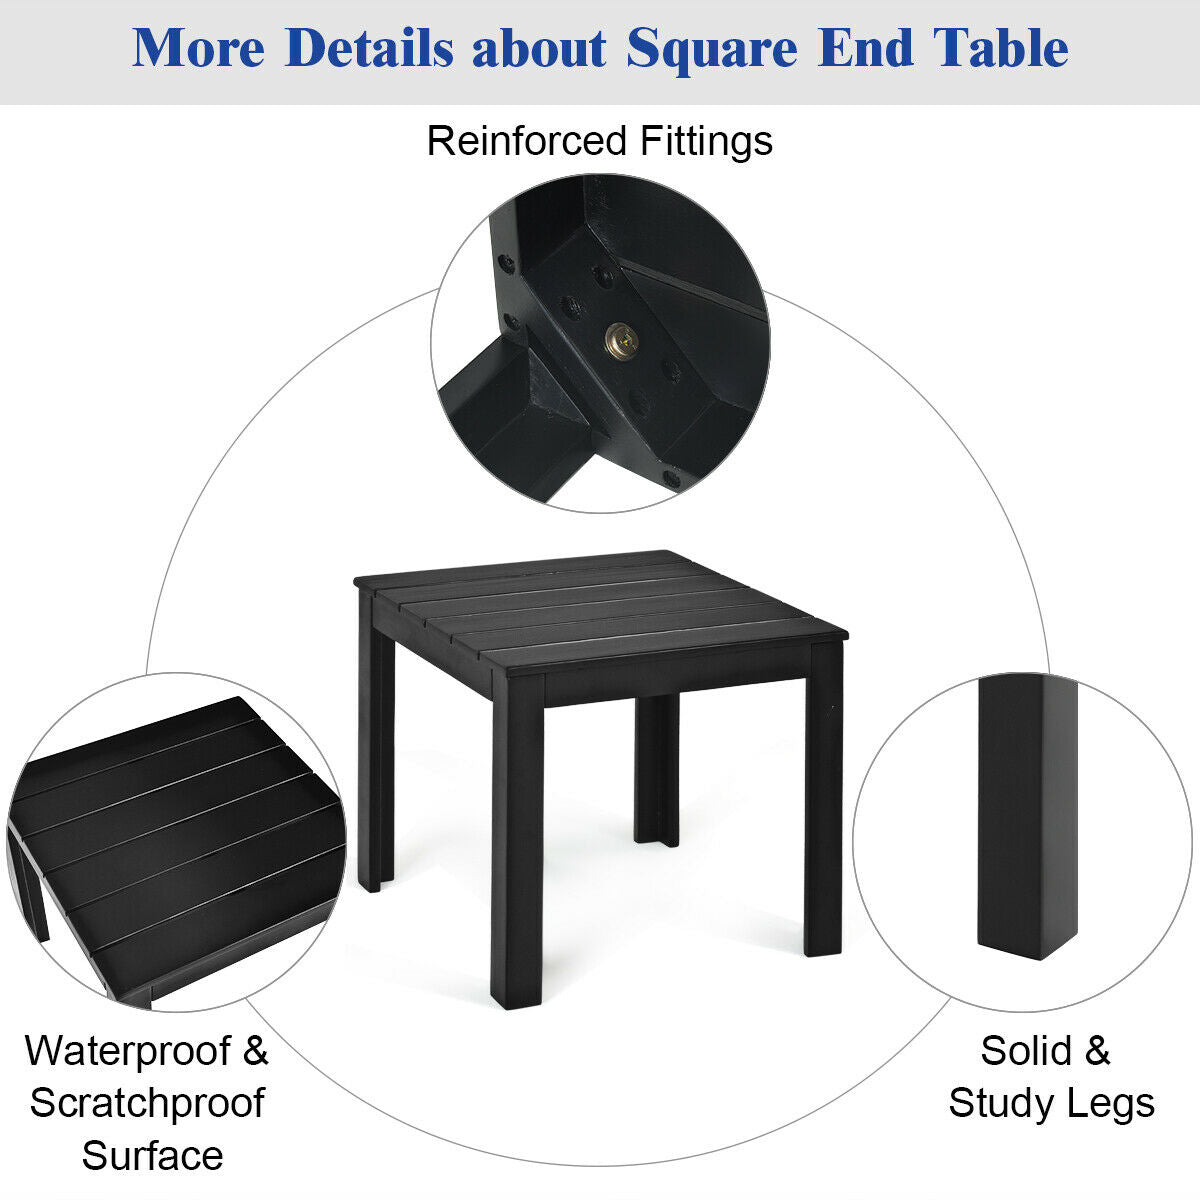 Wooden Square Patio Coffee Bistro Table-Black